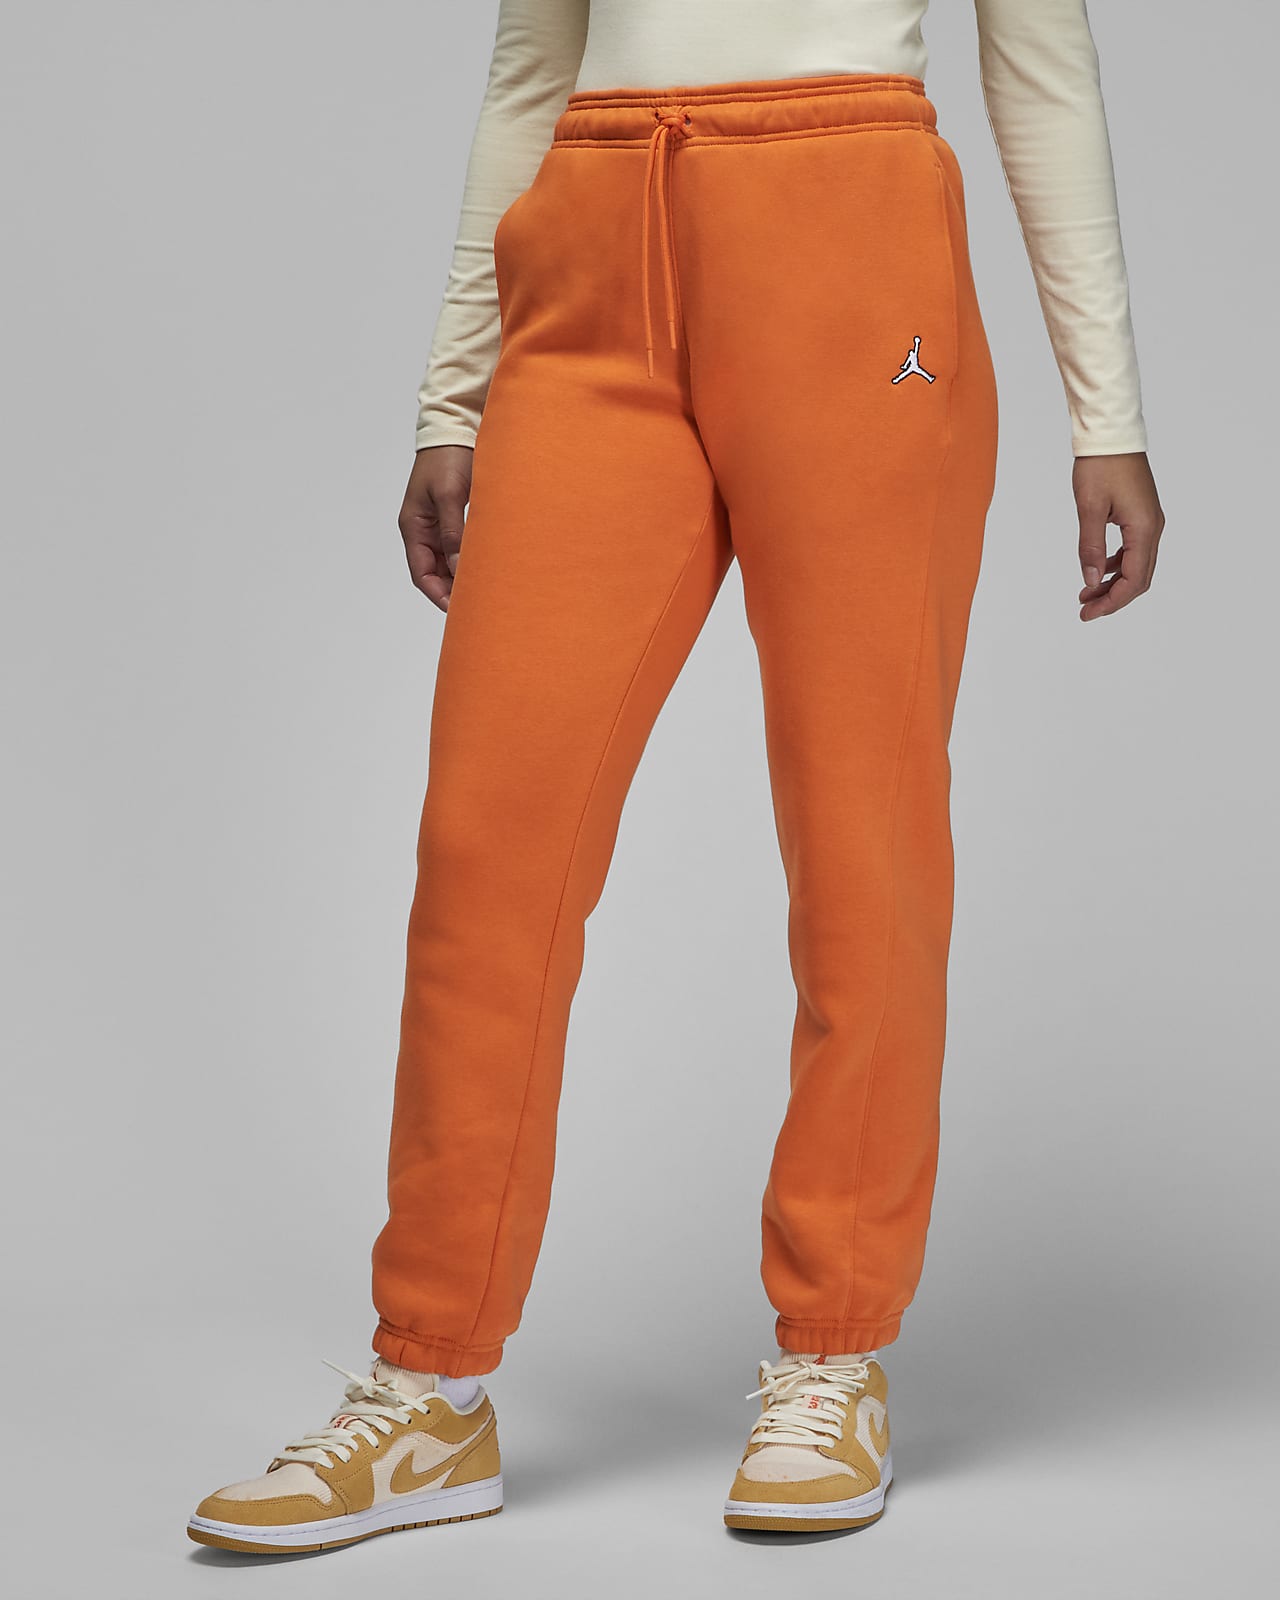 Nike Women's Plus Size Fleece Lined Jogger Athletic Pants (2X, Ghost)